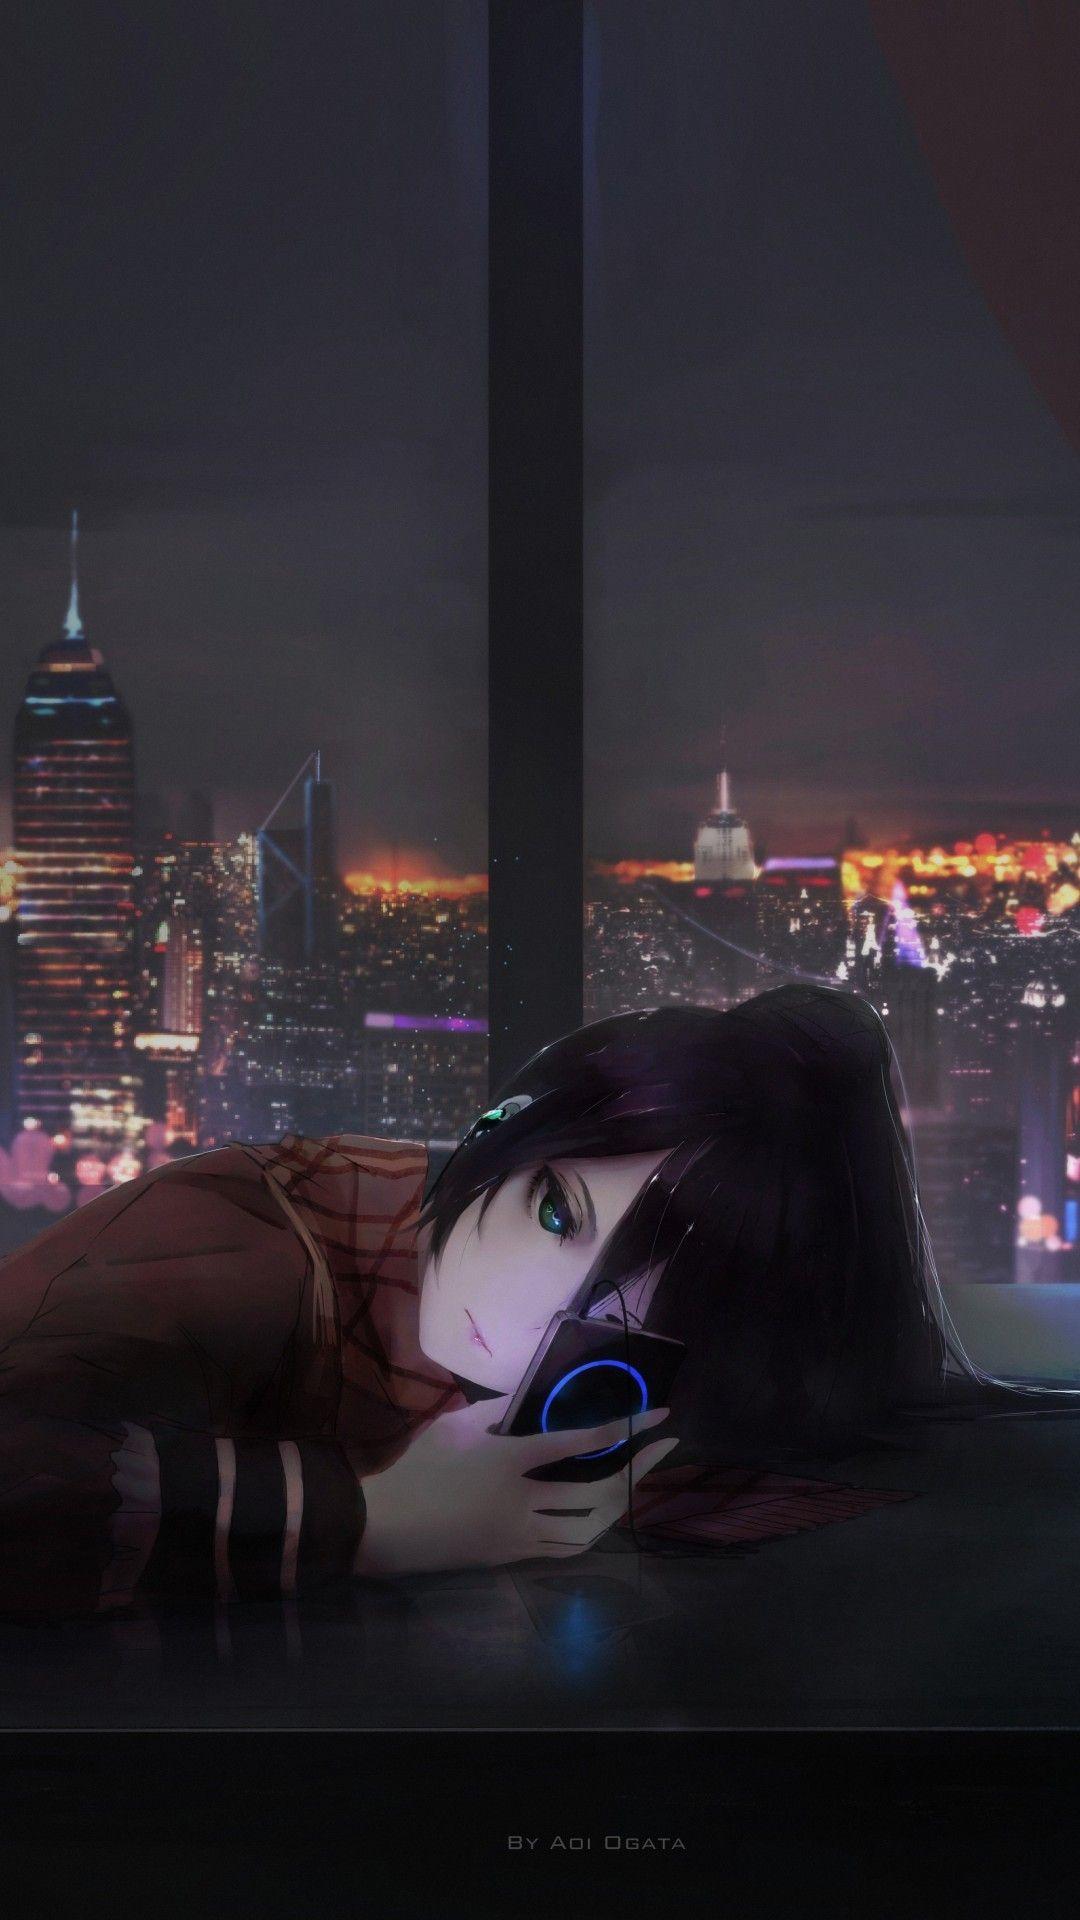 100+] Sad Depressing Anime Wallpapers